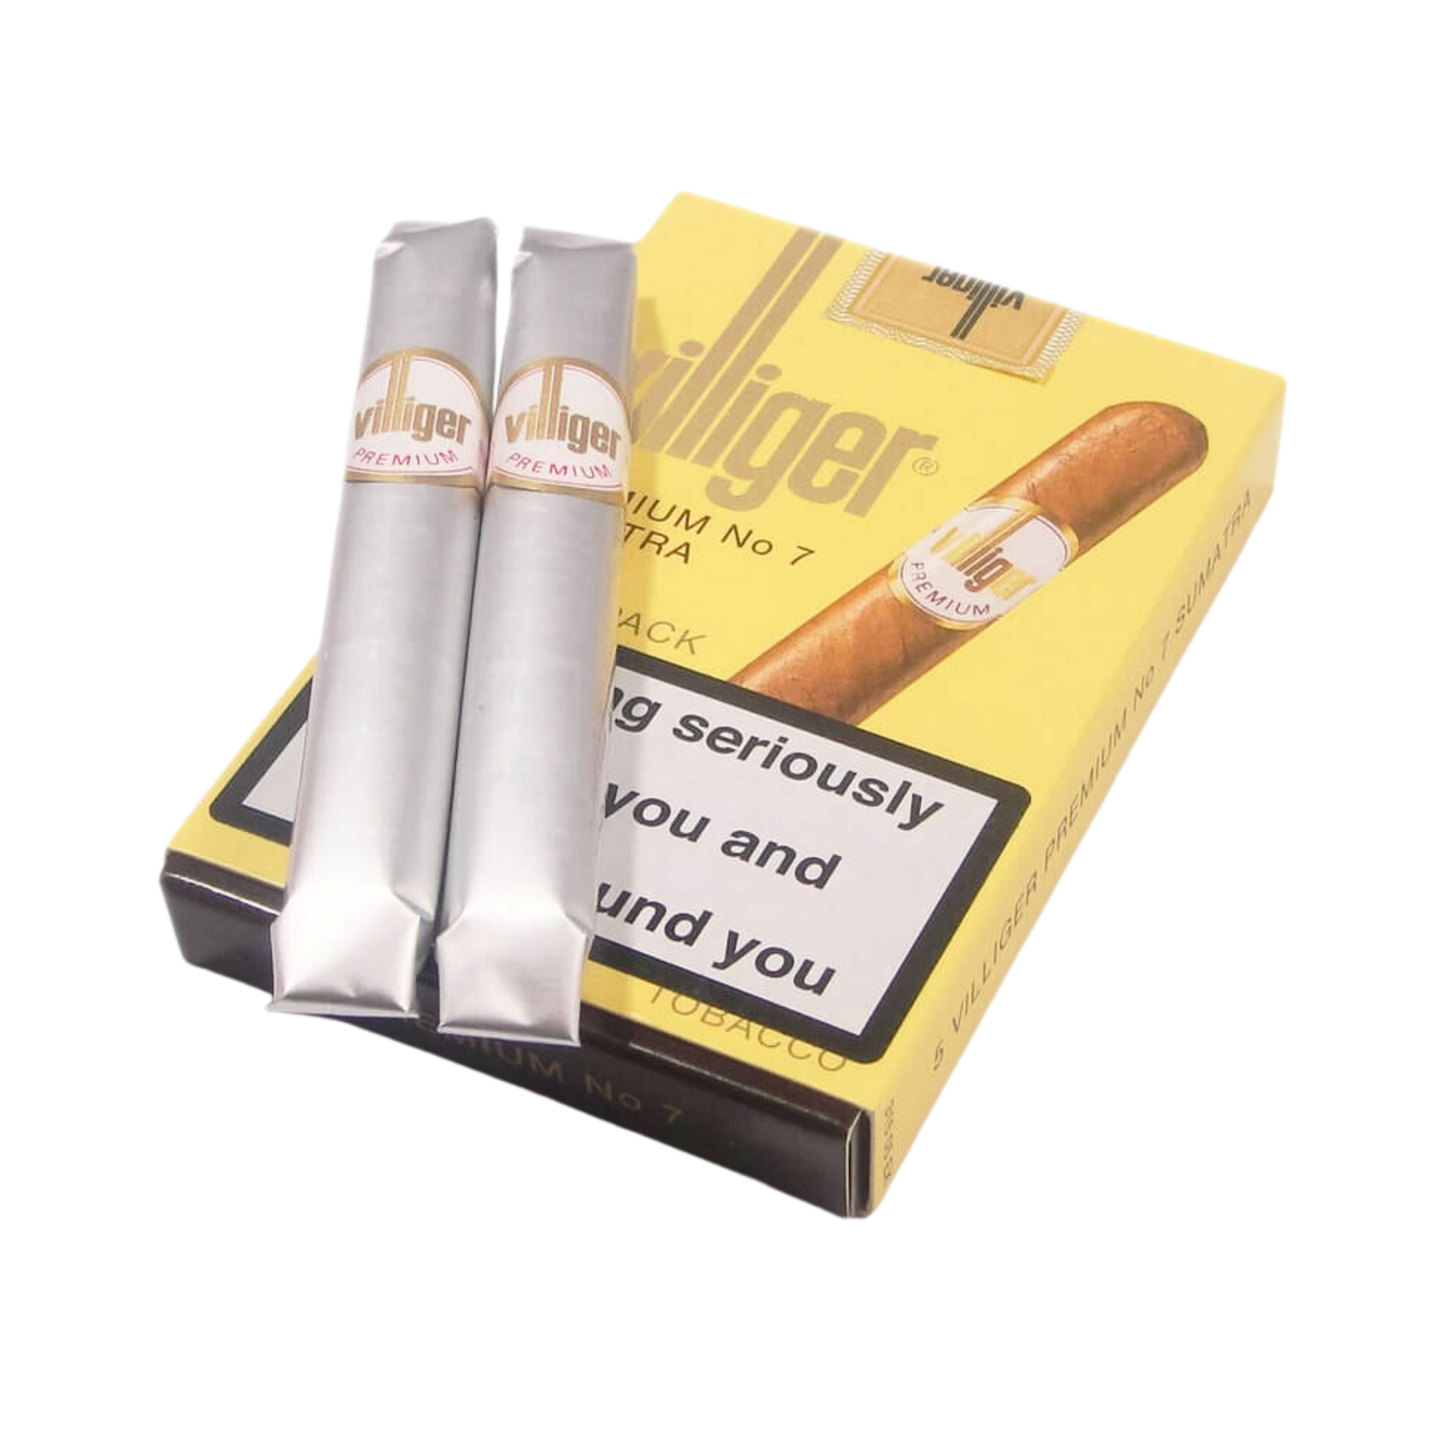 Villigers Premium Number 7 cigar - pack of 5